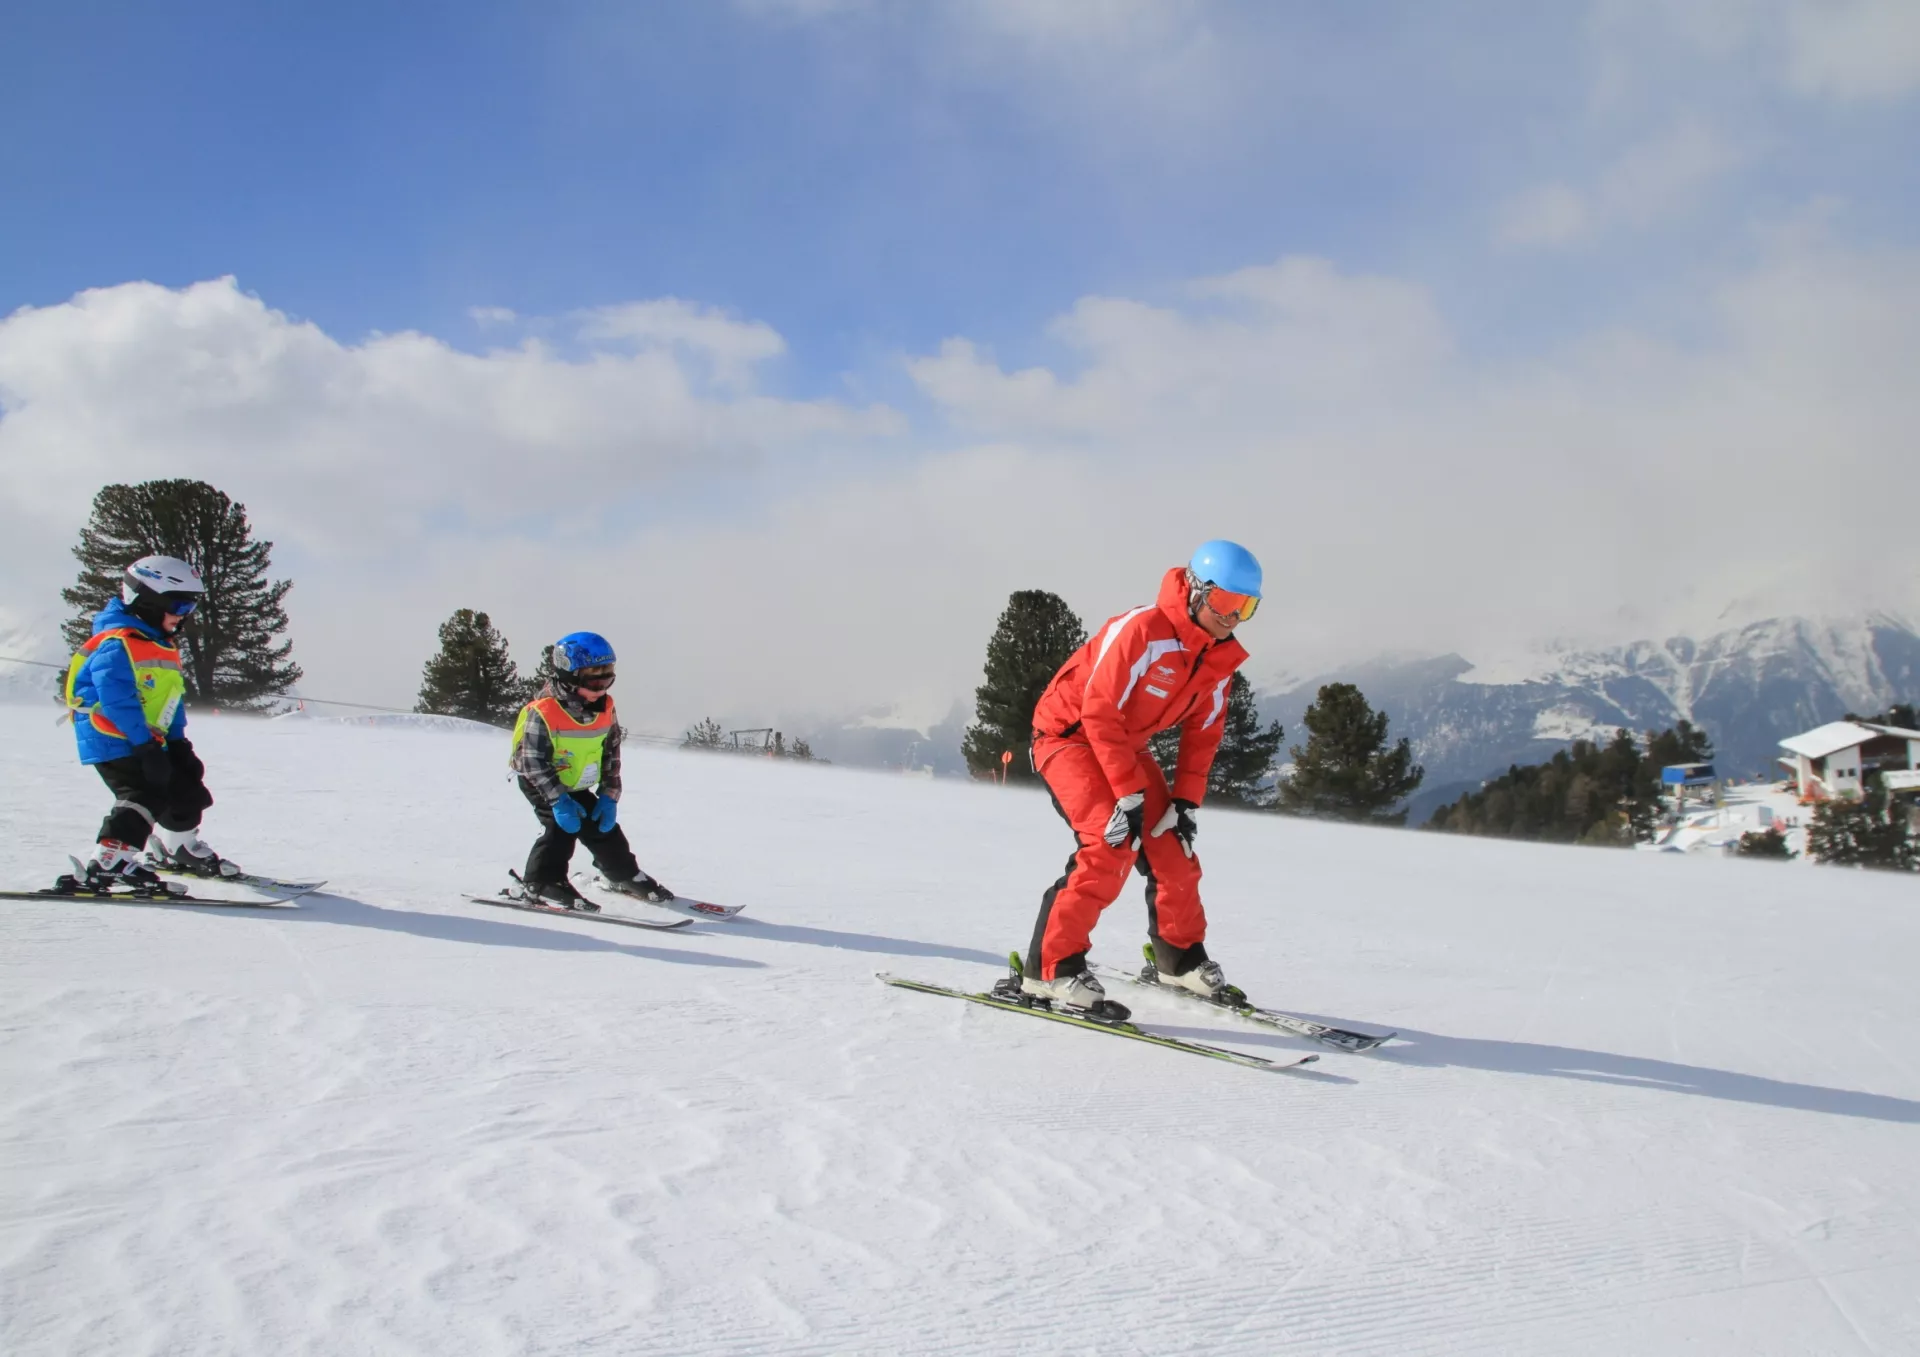 Gastekindergarten in Austria, Europe | Snowboarding,Skiing - Rated 0.7